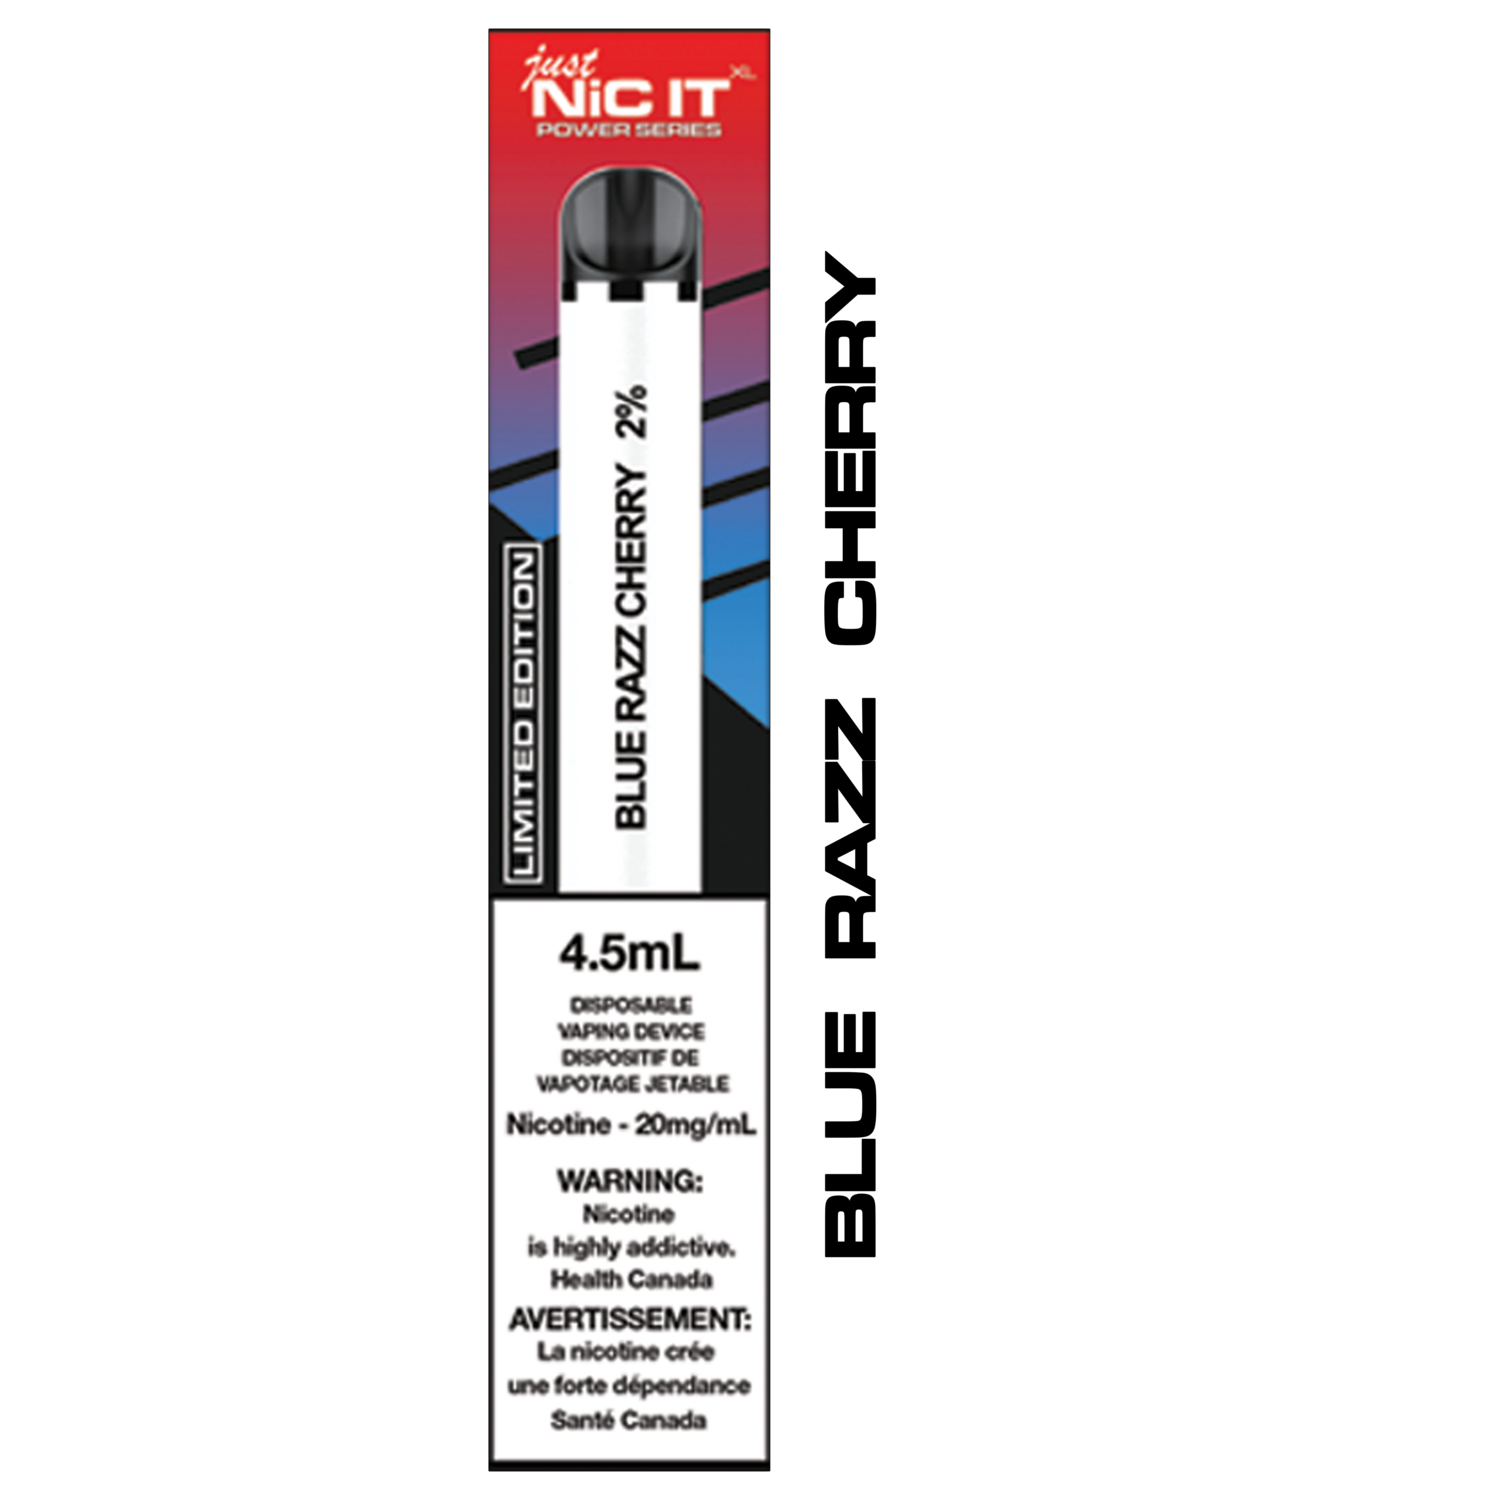 NIC-IT XL Limited Edition - Blue Razz Cherry